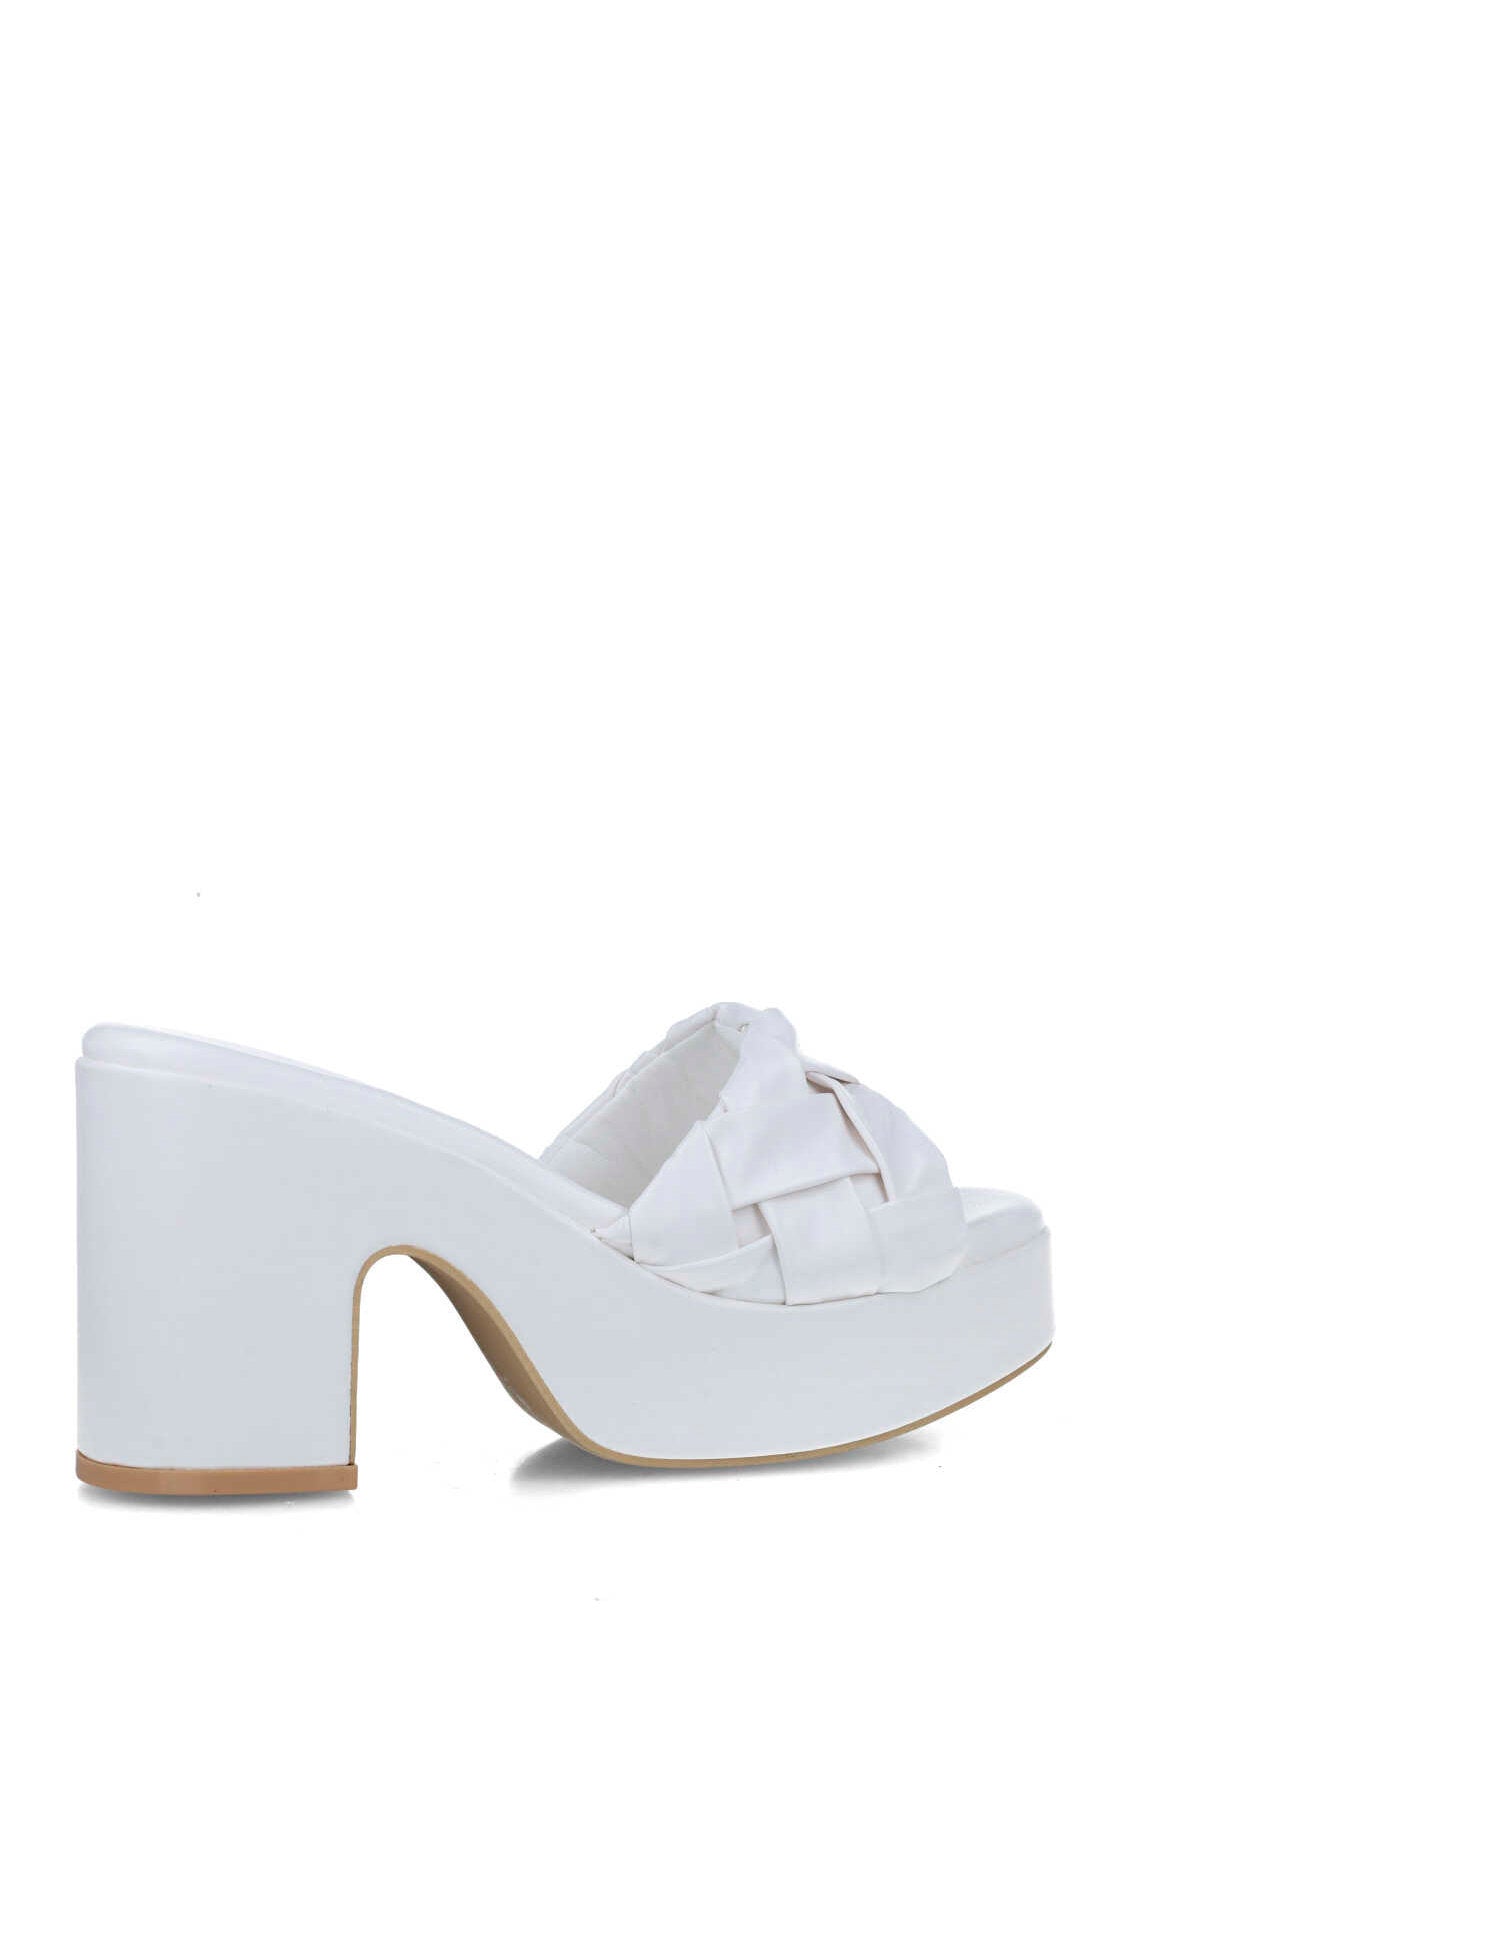 White Platform Slipper Heels_25566_06_03